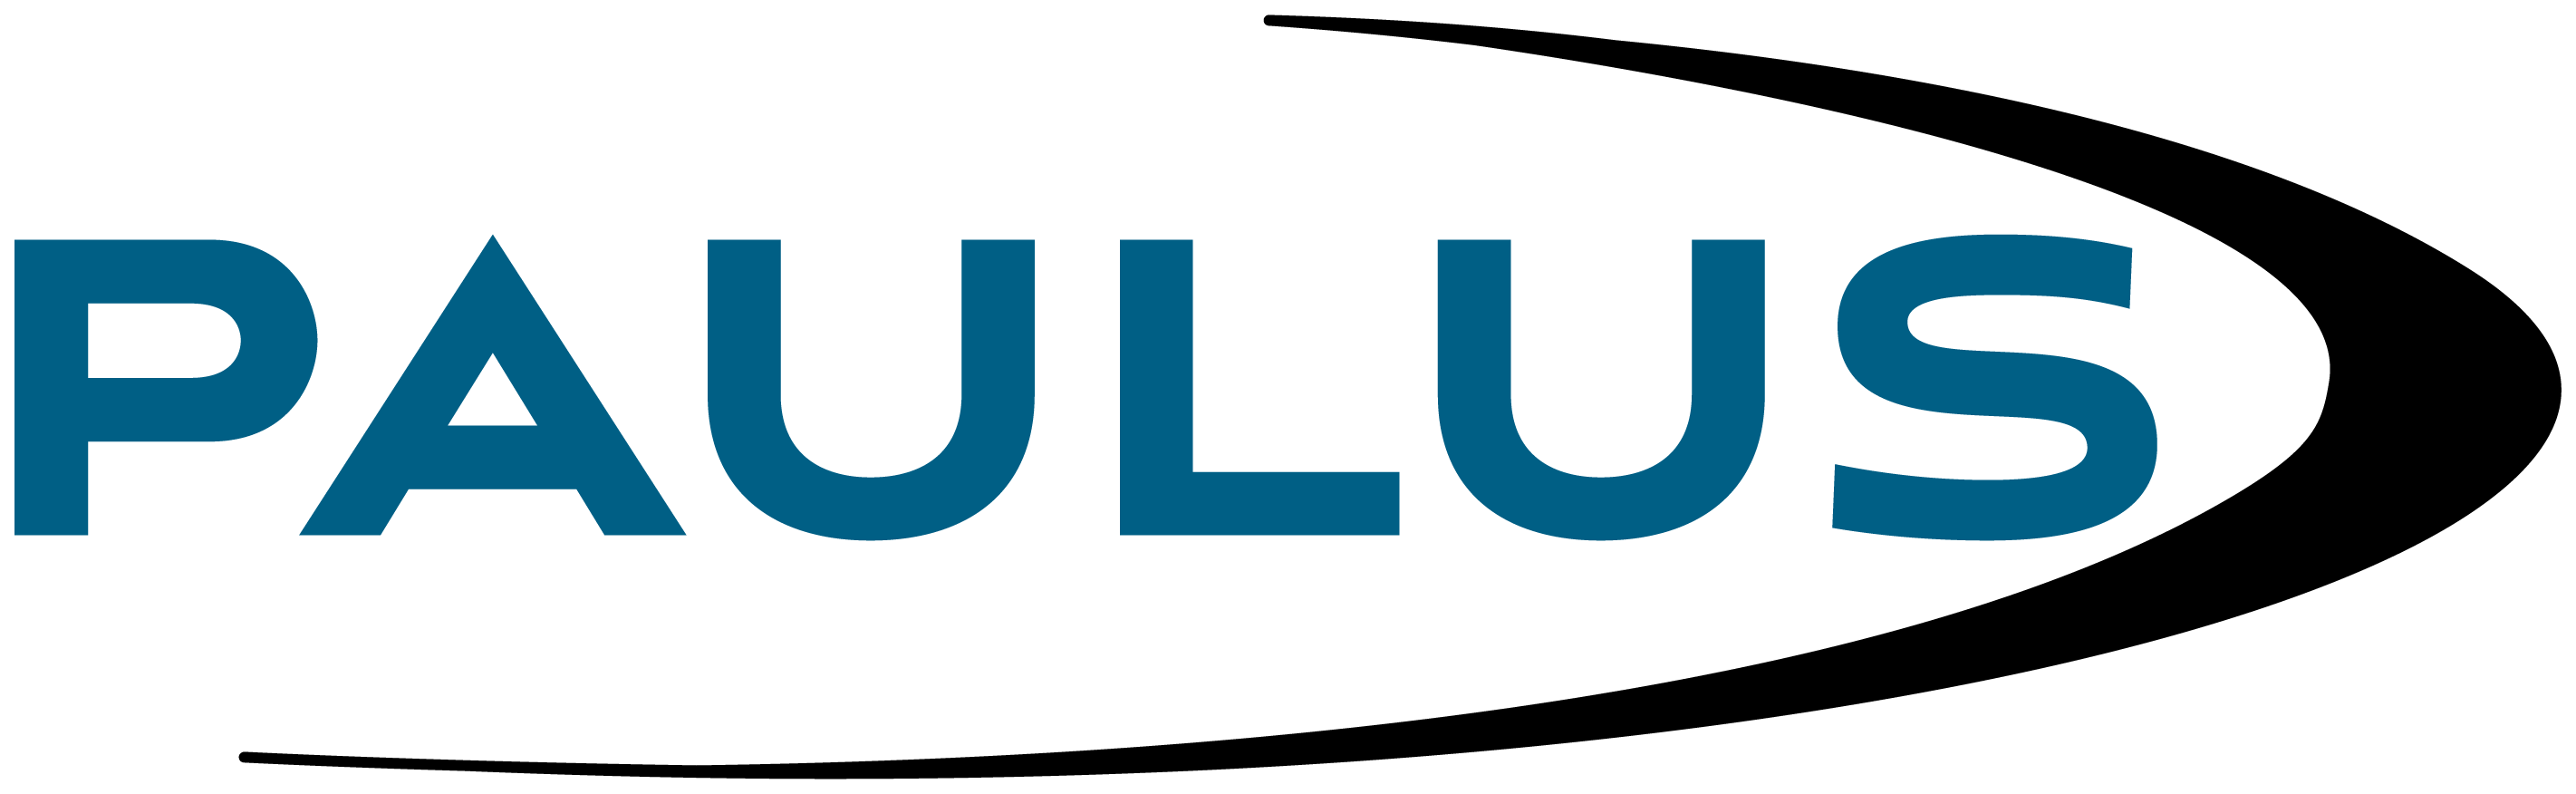 Paulus-Logo-Stroke-Color